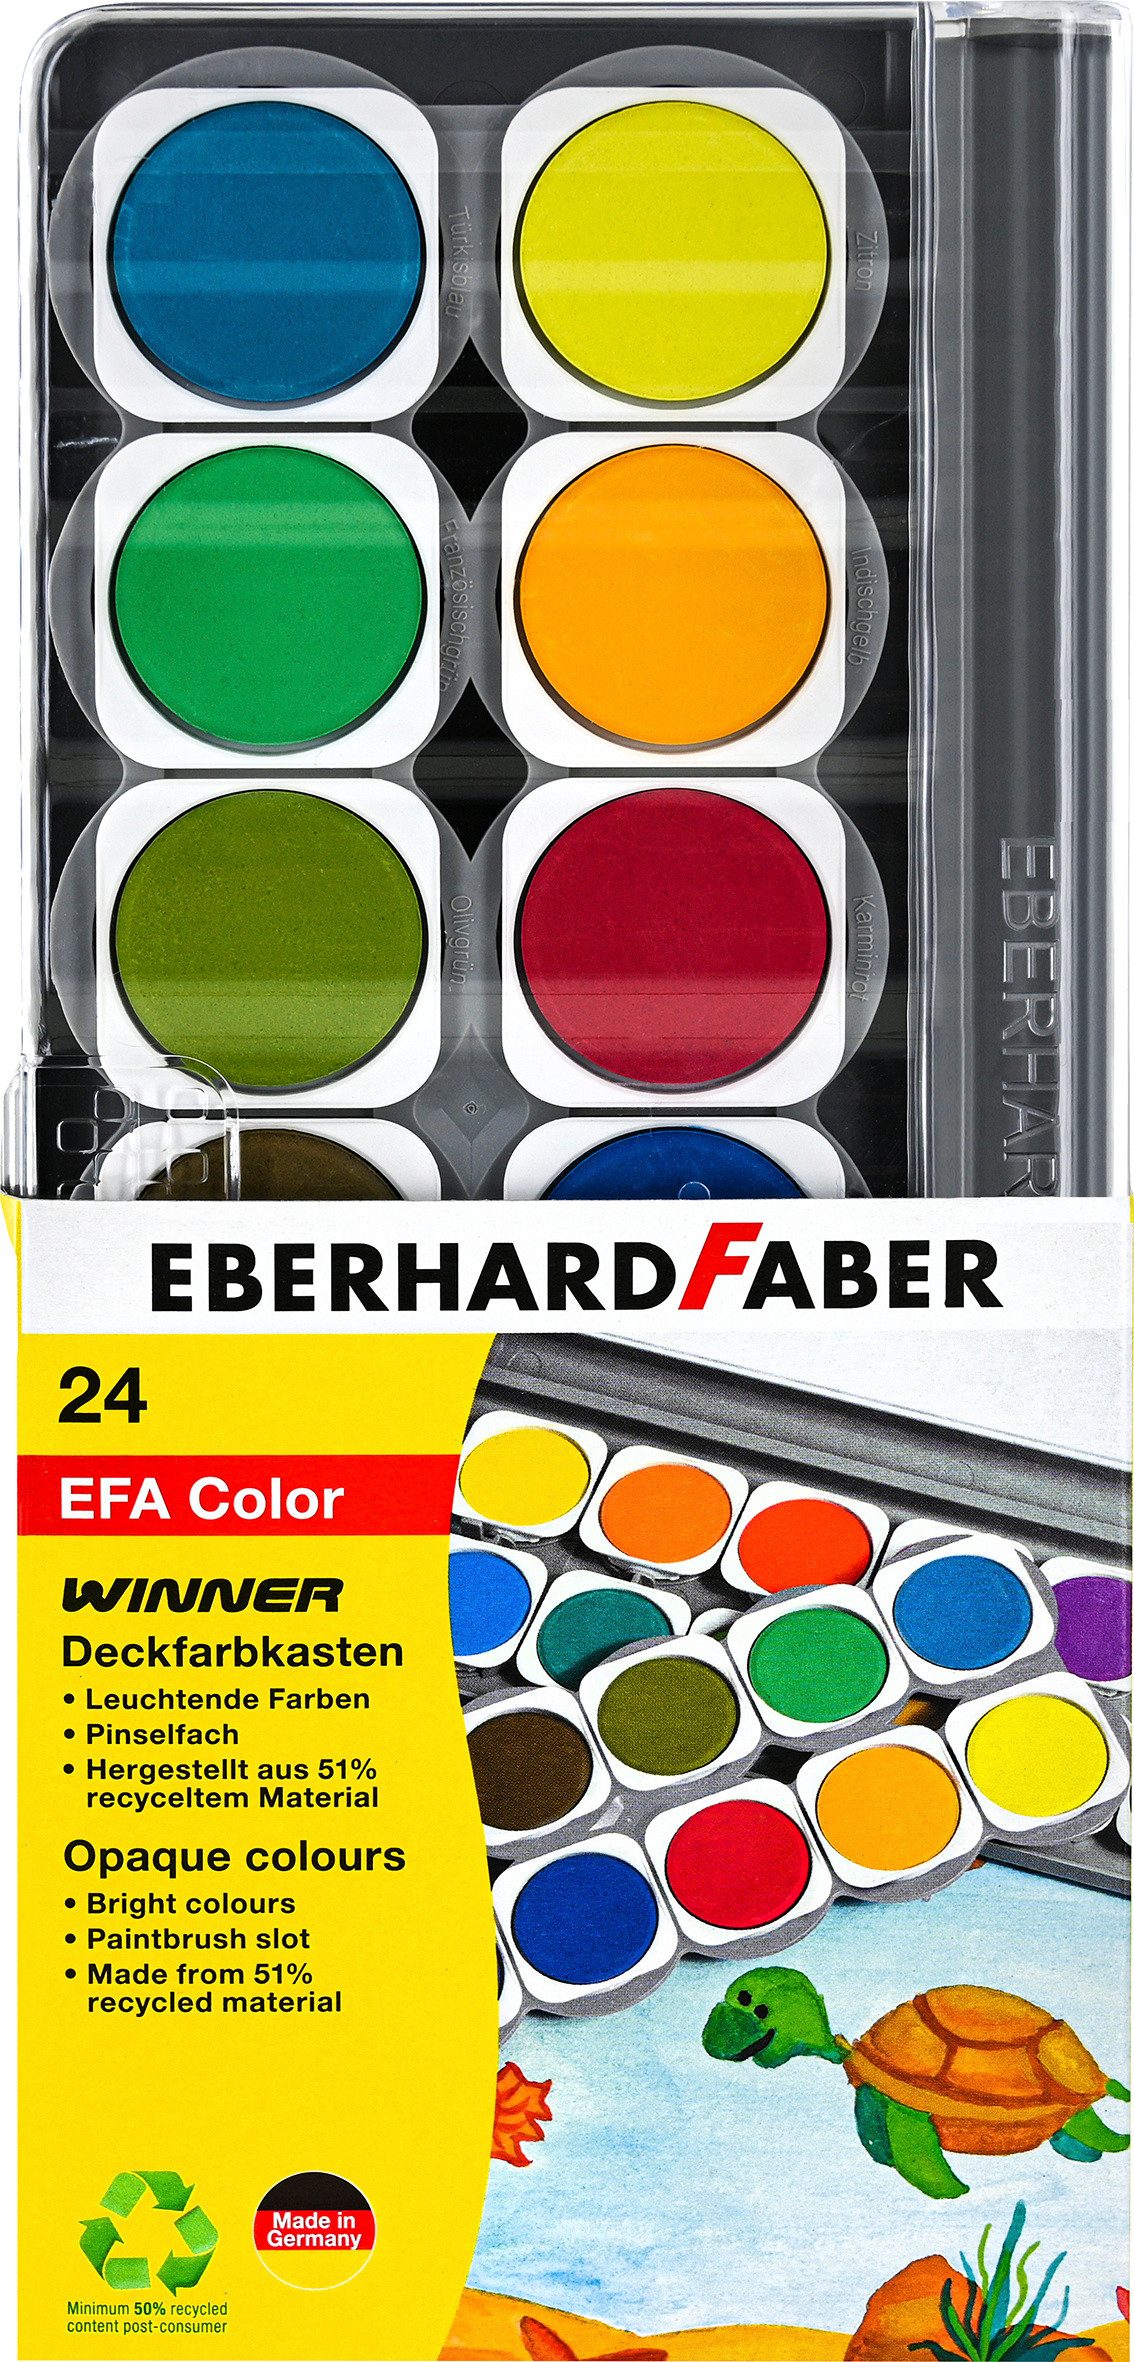 Eberhard Faber Malpalette Winner Deckfarbkasten, 12 oder 24 Farben